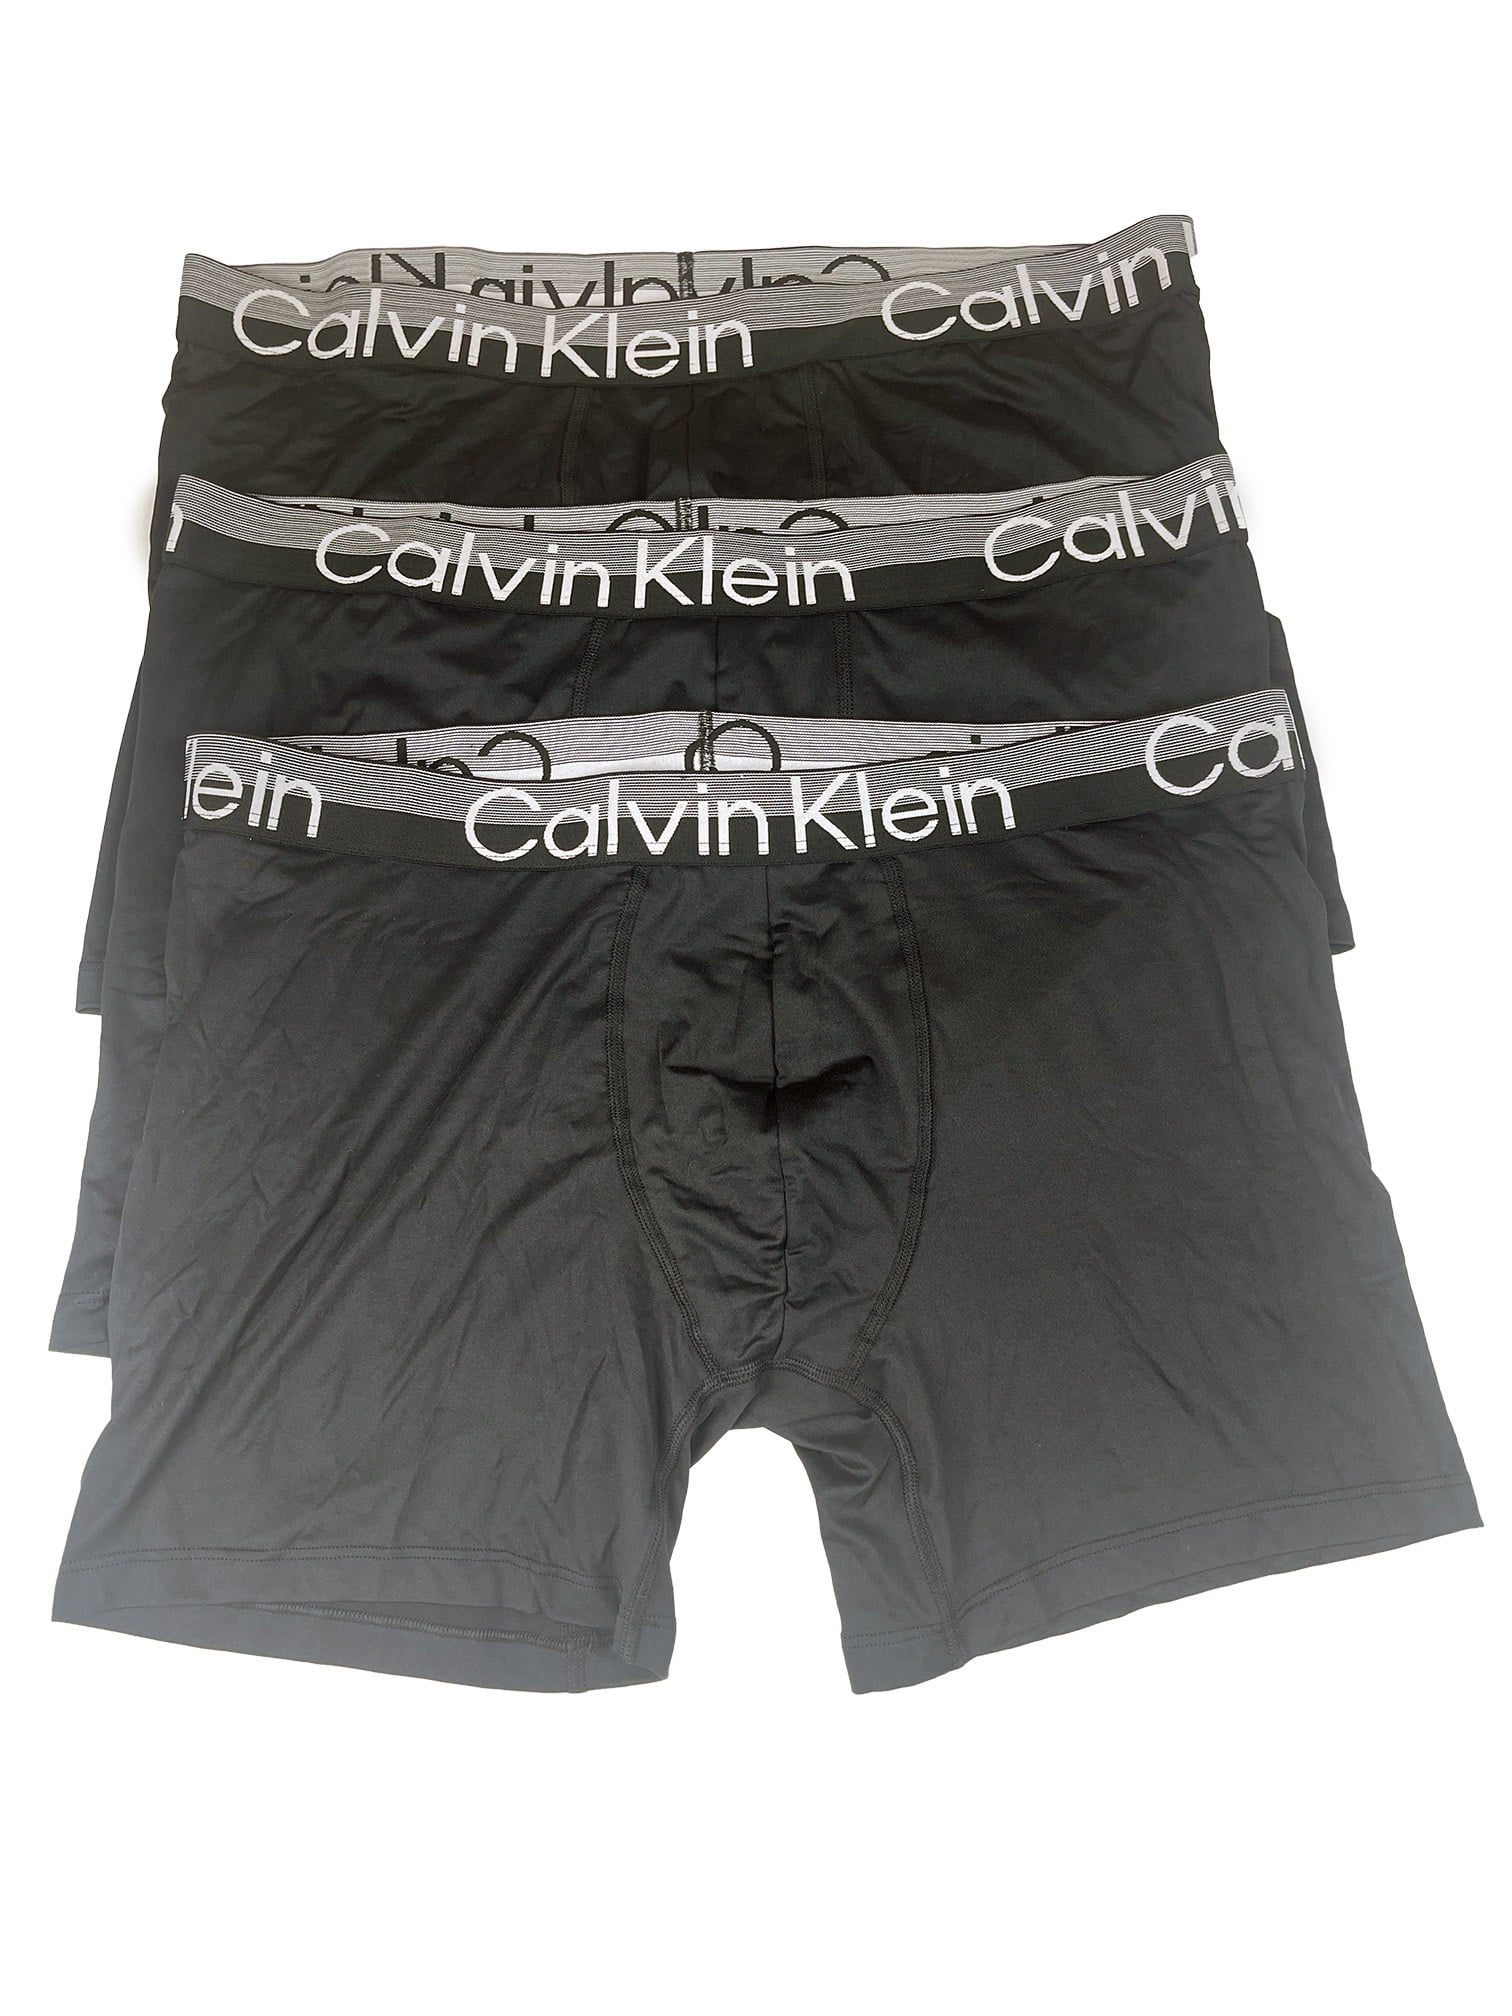 Calvin Klein Men's Microfiber Boxer Briefs 3 Pack (Black,Black,Black XL)